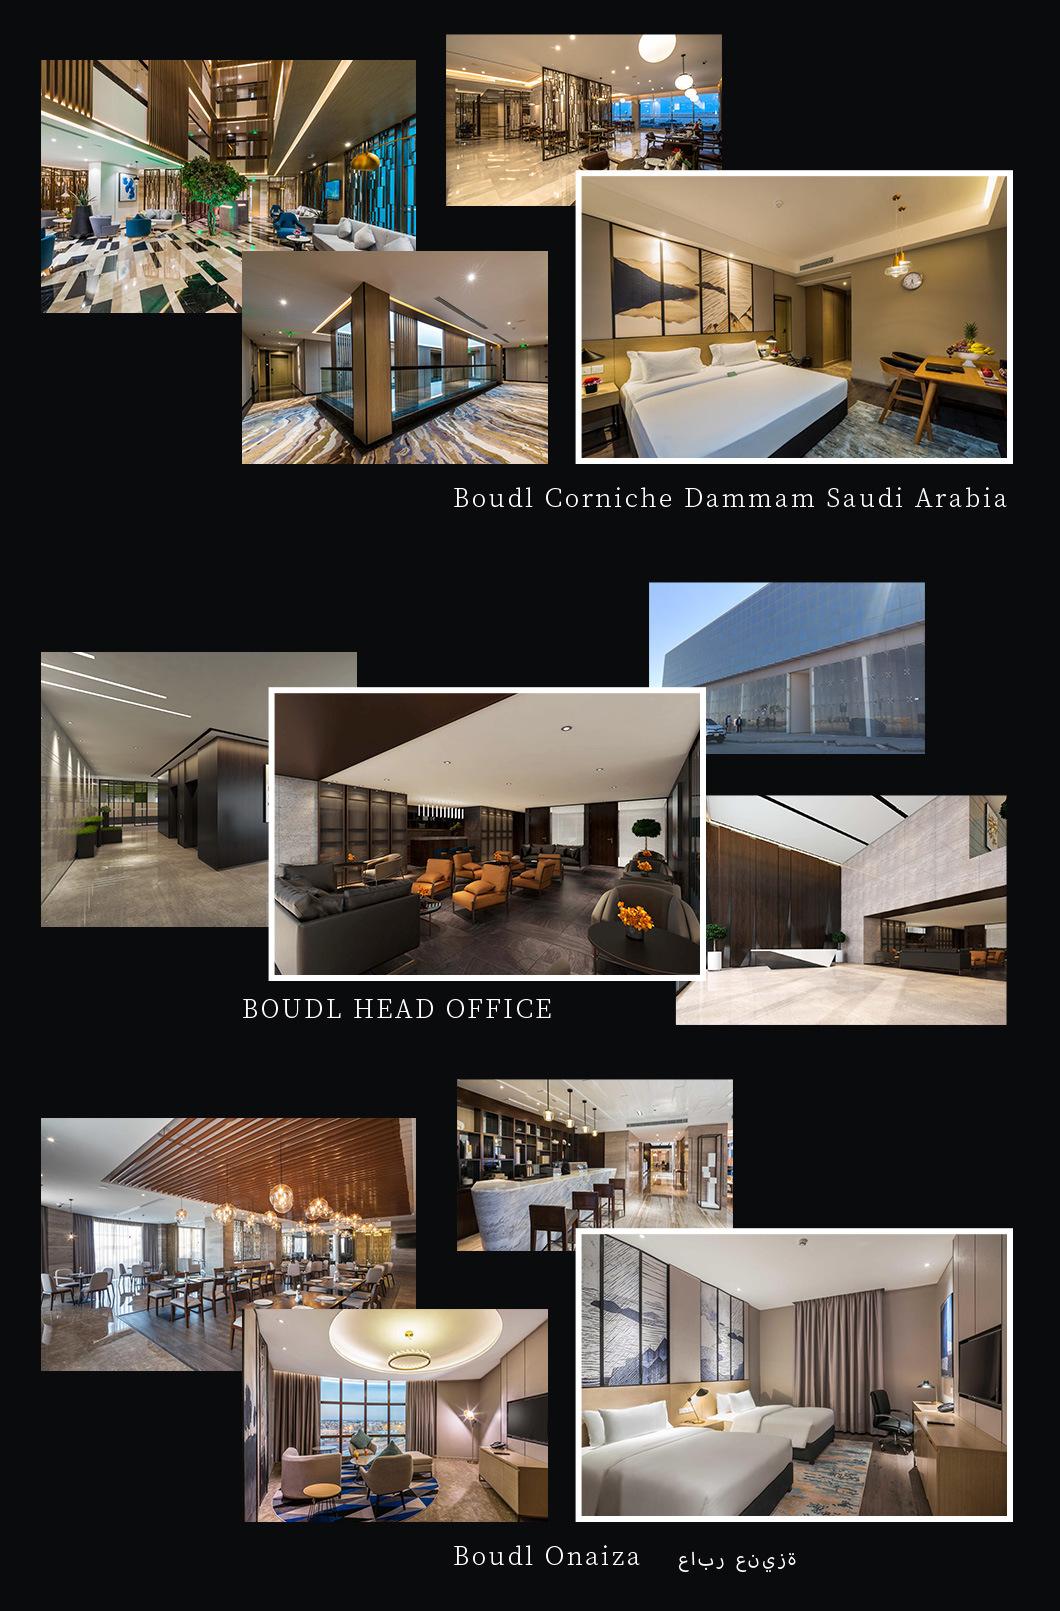 Thailand Project 5 Star Luxury Modern Bedroom Design Marriott Hotel Furniture Manufactured